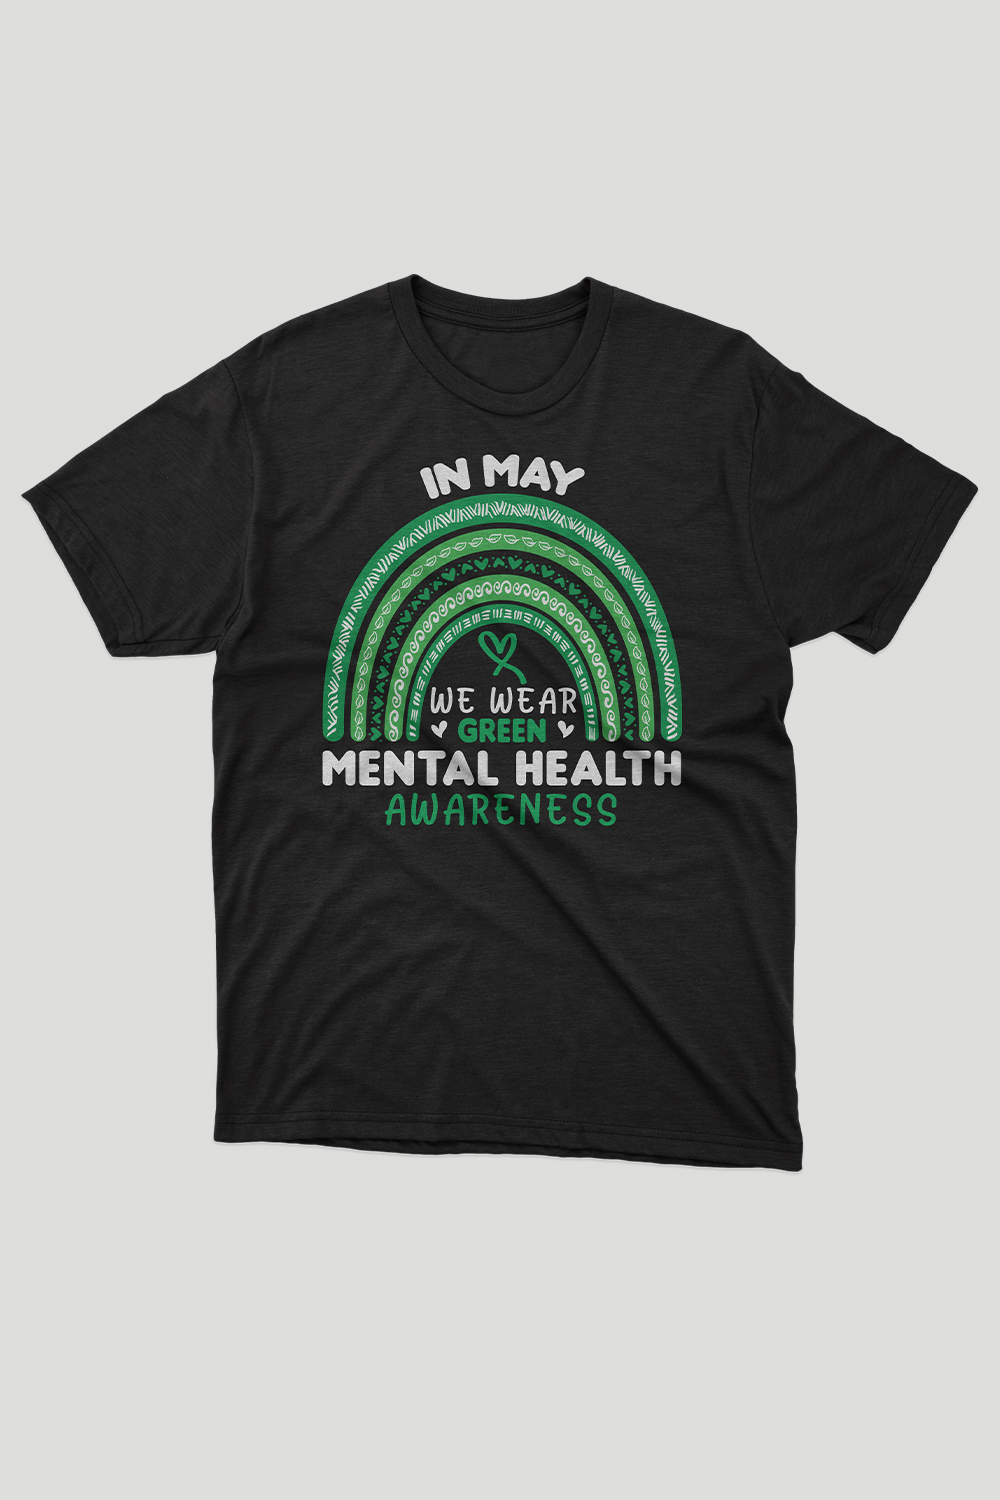 In May We Wear Green Mental Health Awareness Green Rainbow T-Shirt, Health T-Shirt, medical T-Shirt, pinterest preview image.